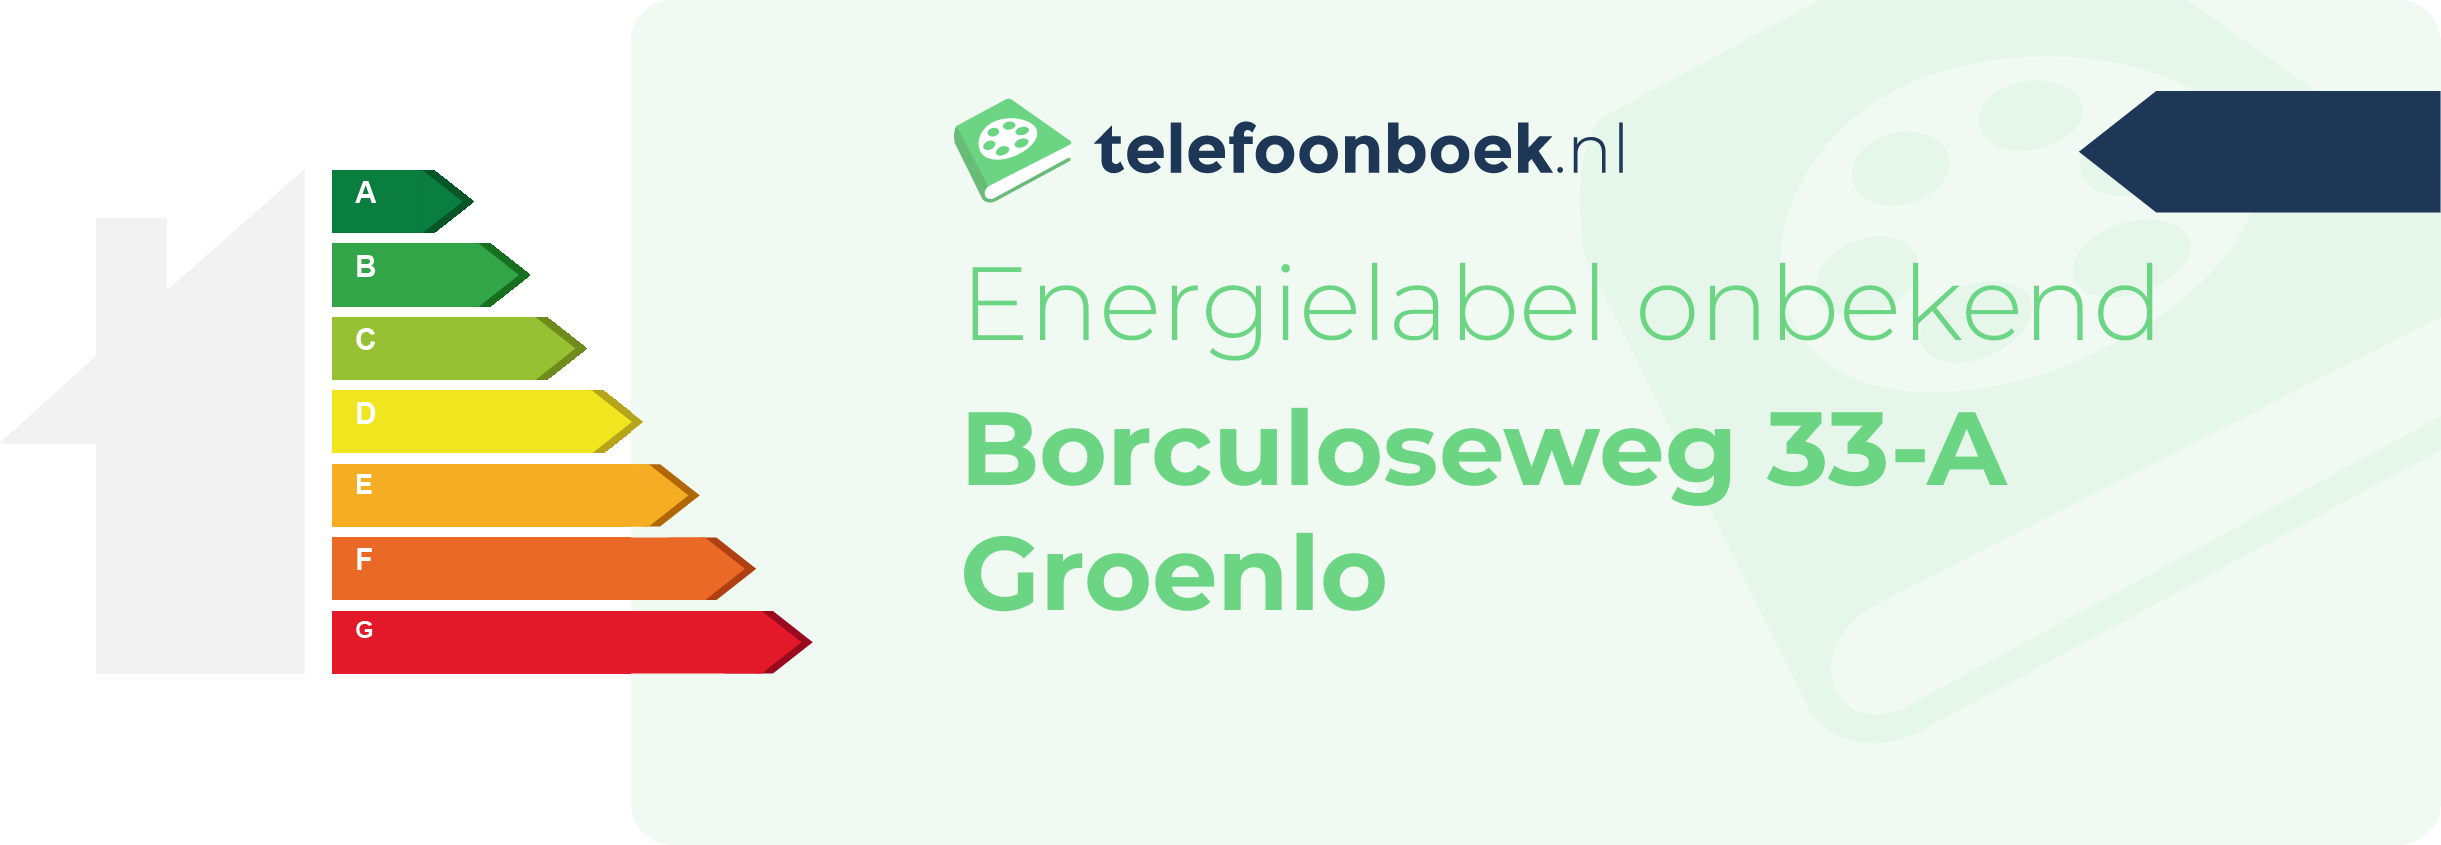 Energielabel Borculoseweg 33-A Groenlo